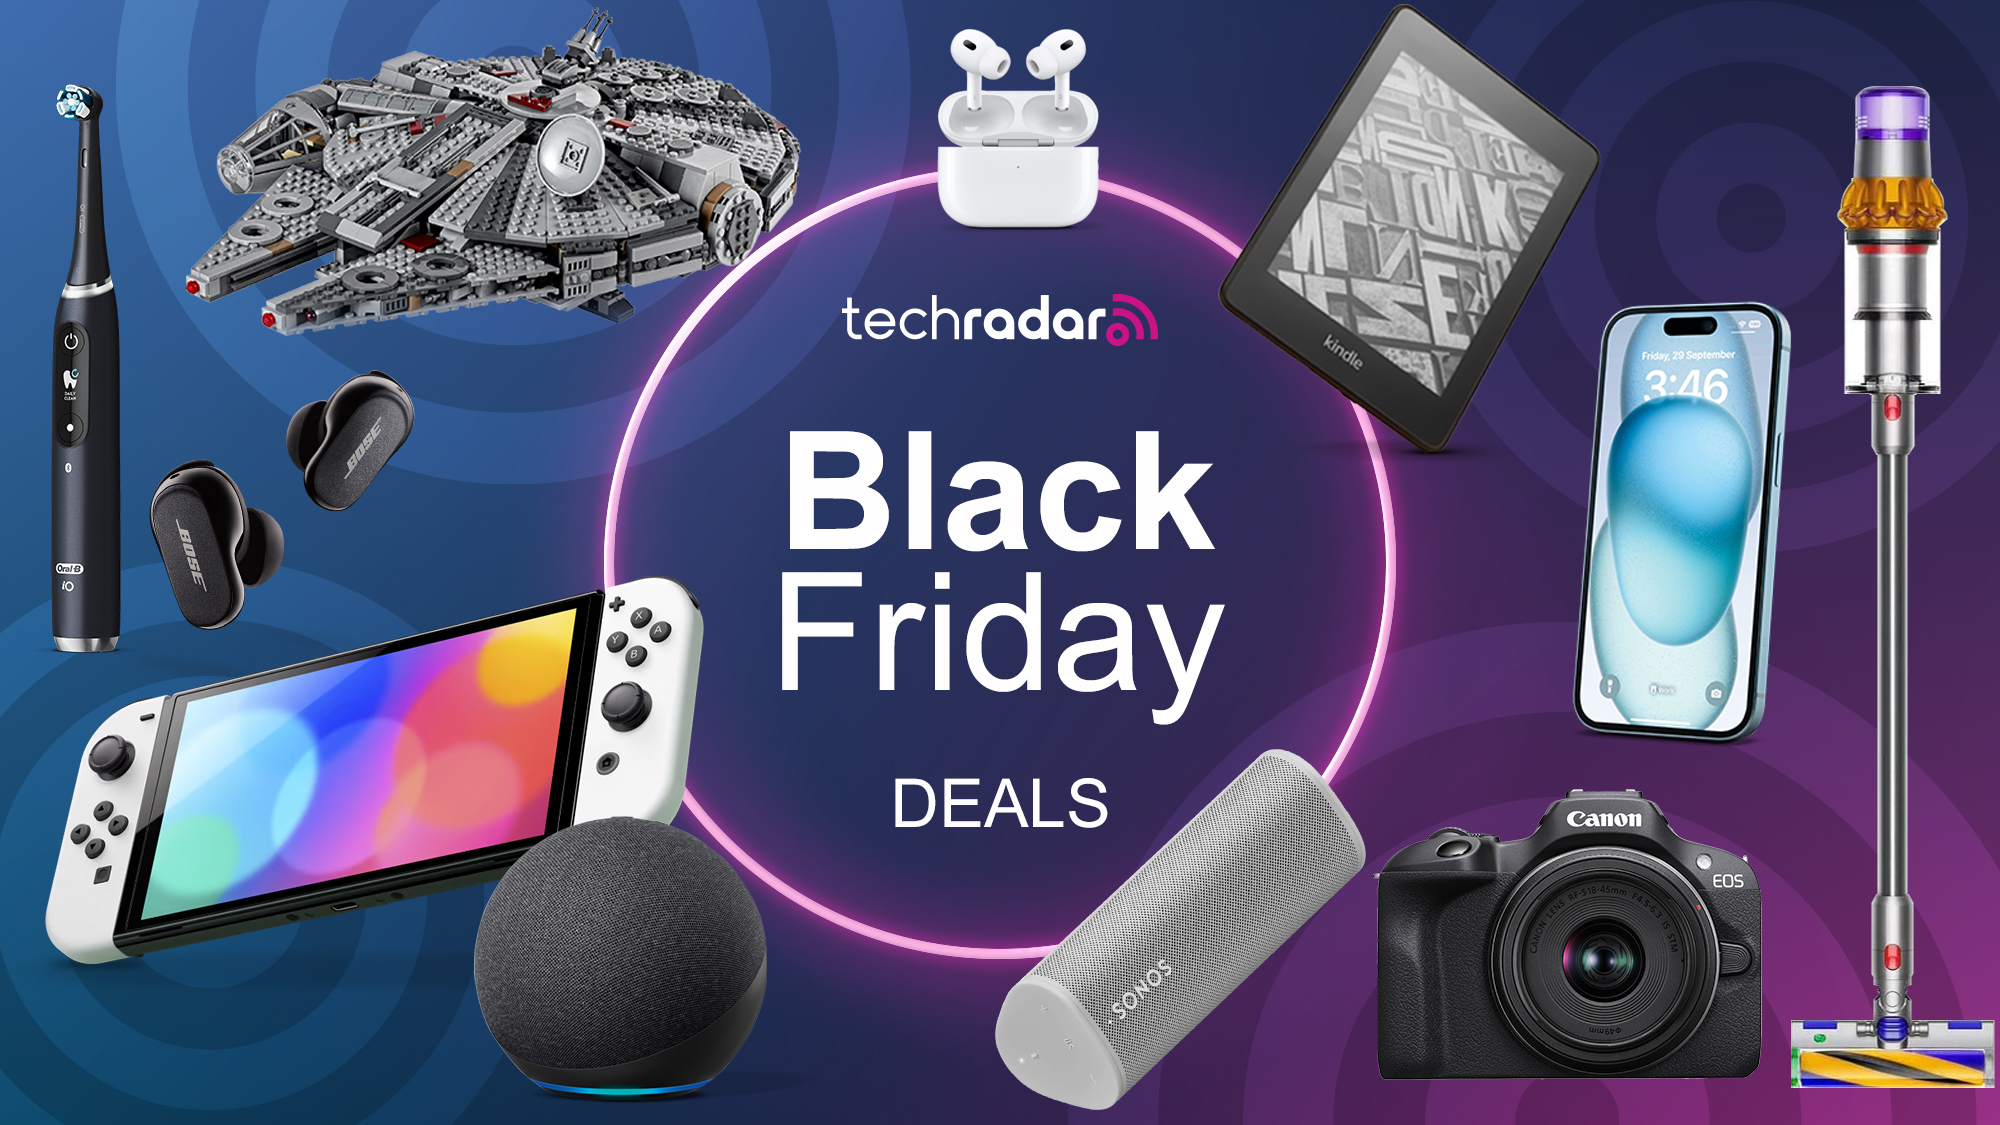 Various tech products surround the TechRadar Black Friday deals logo